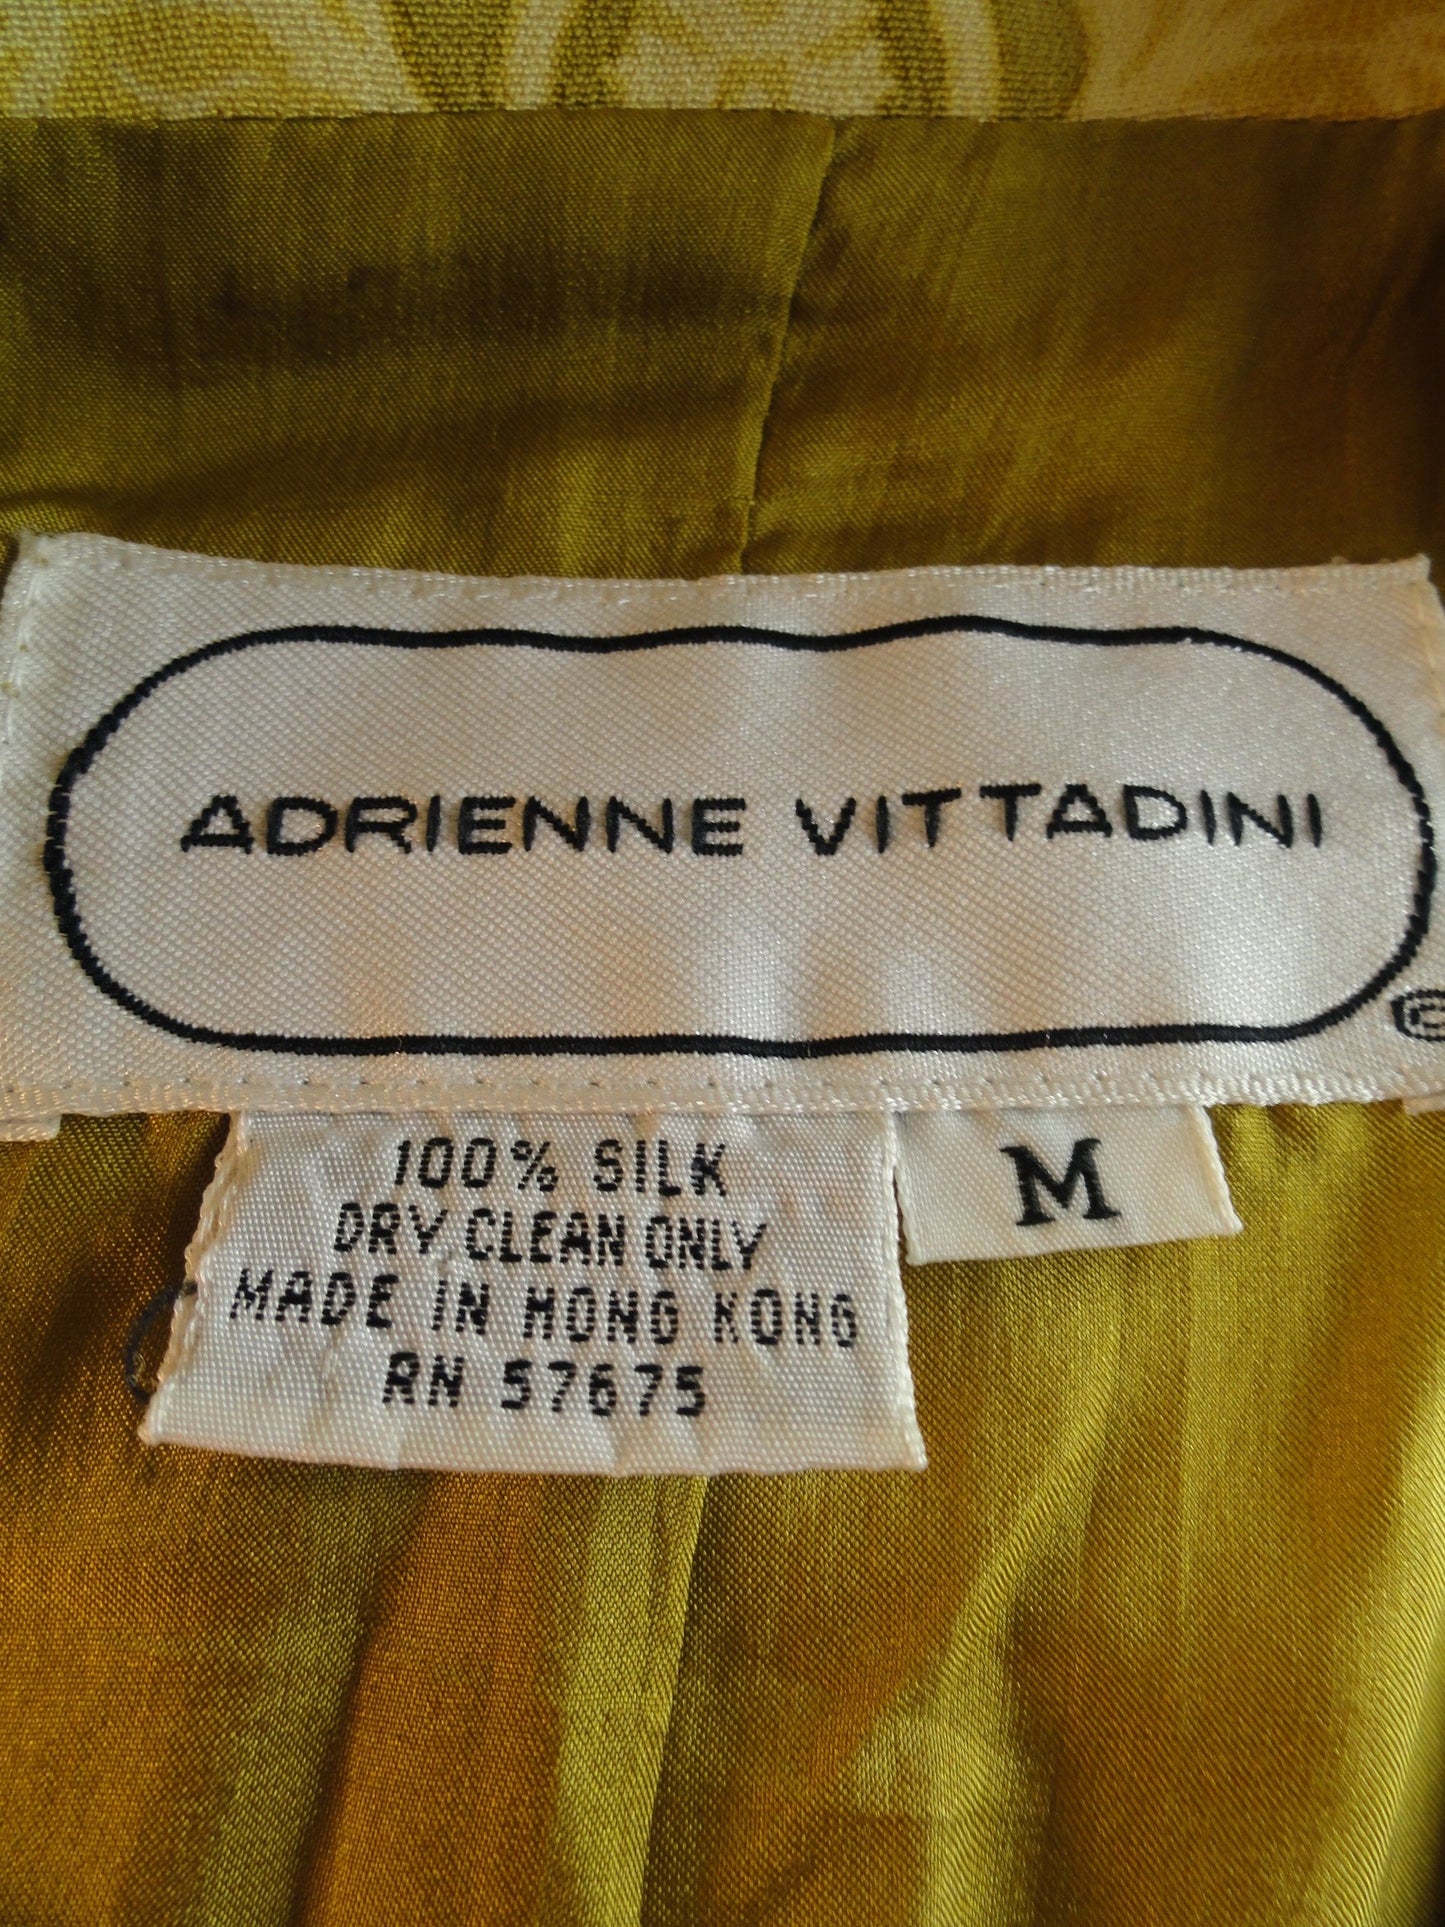 Adrienne Vittadini 70's Blazer Yellow & Green Size M SKU 000008 ...